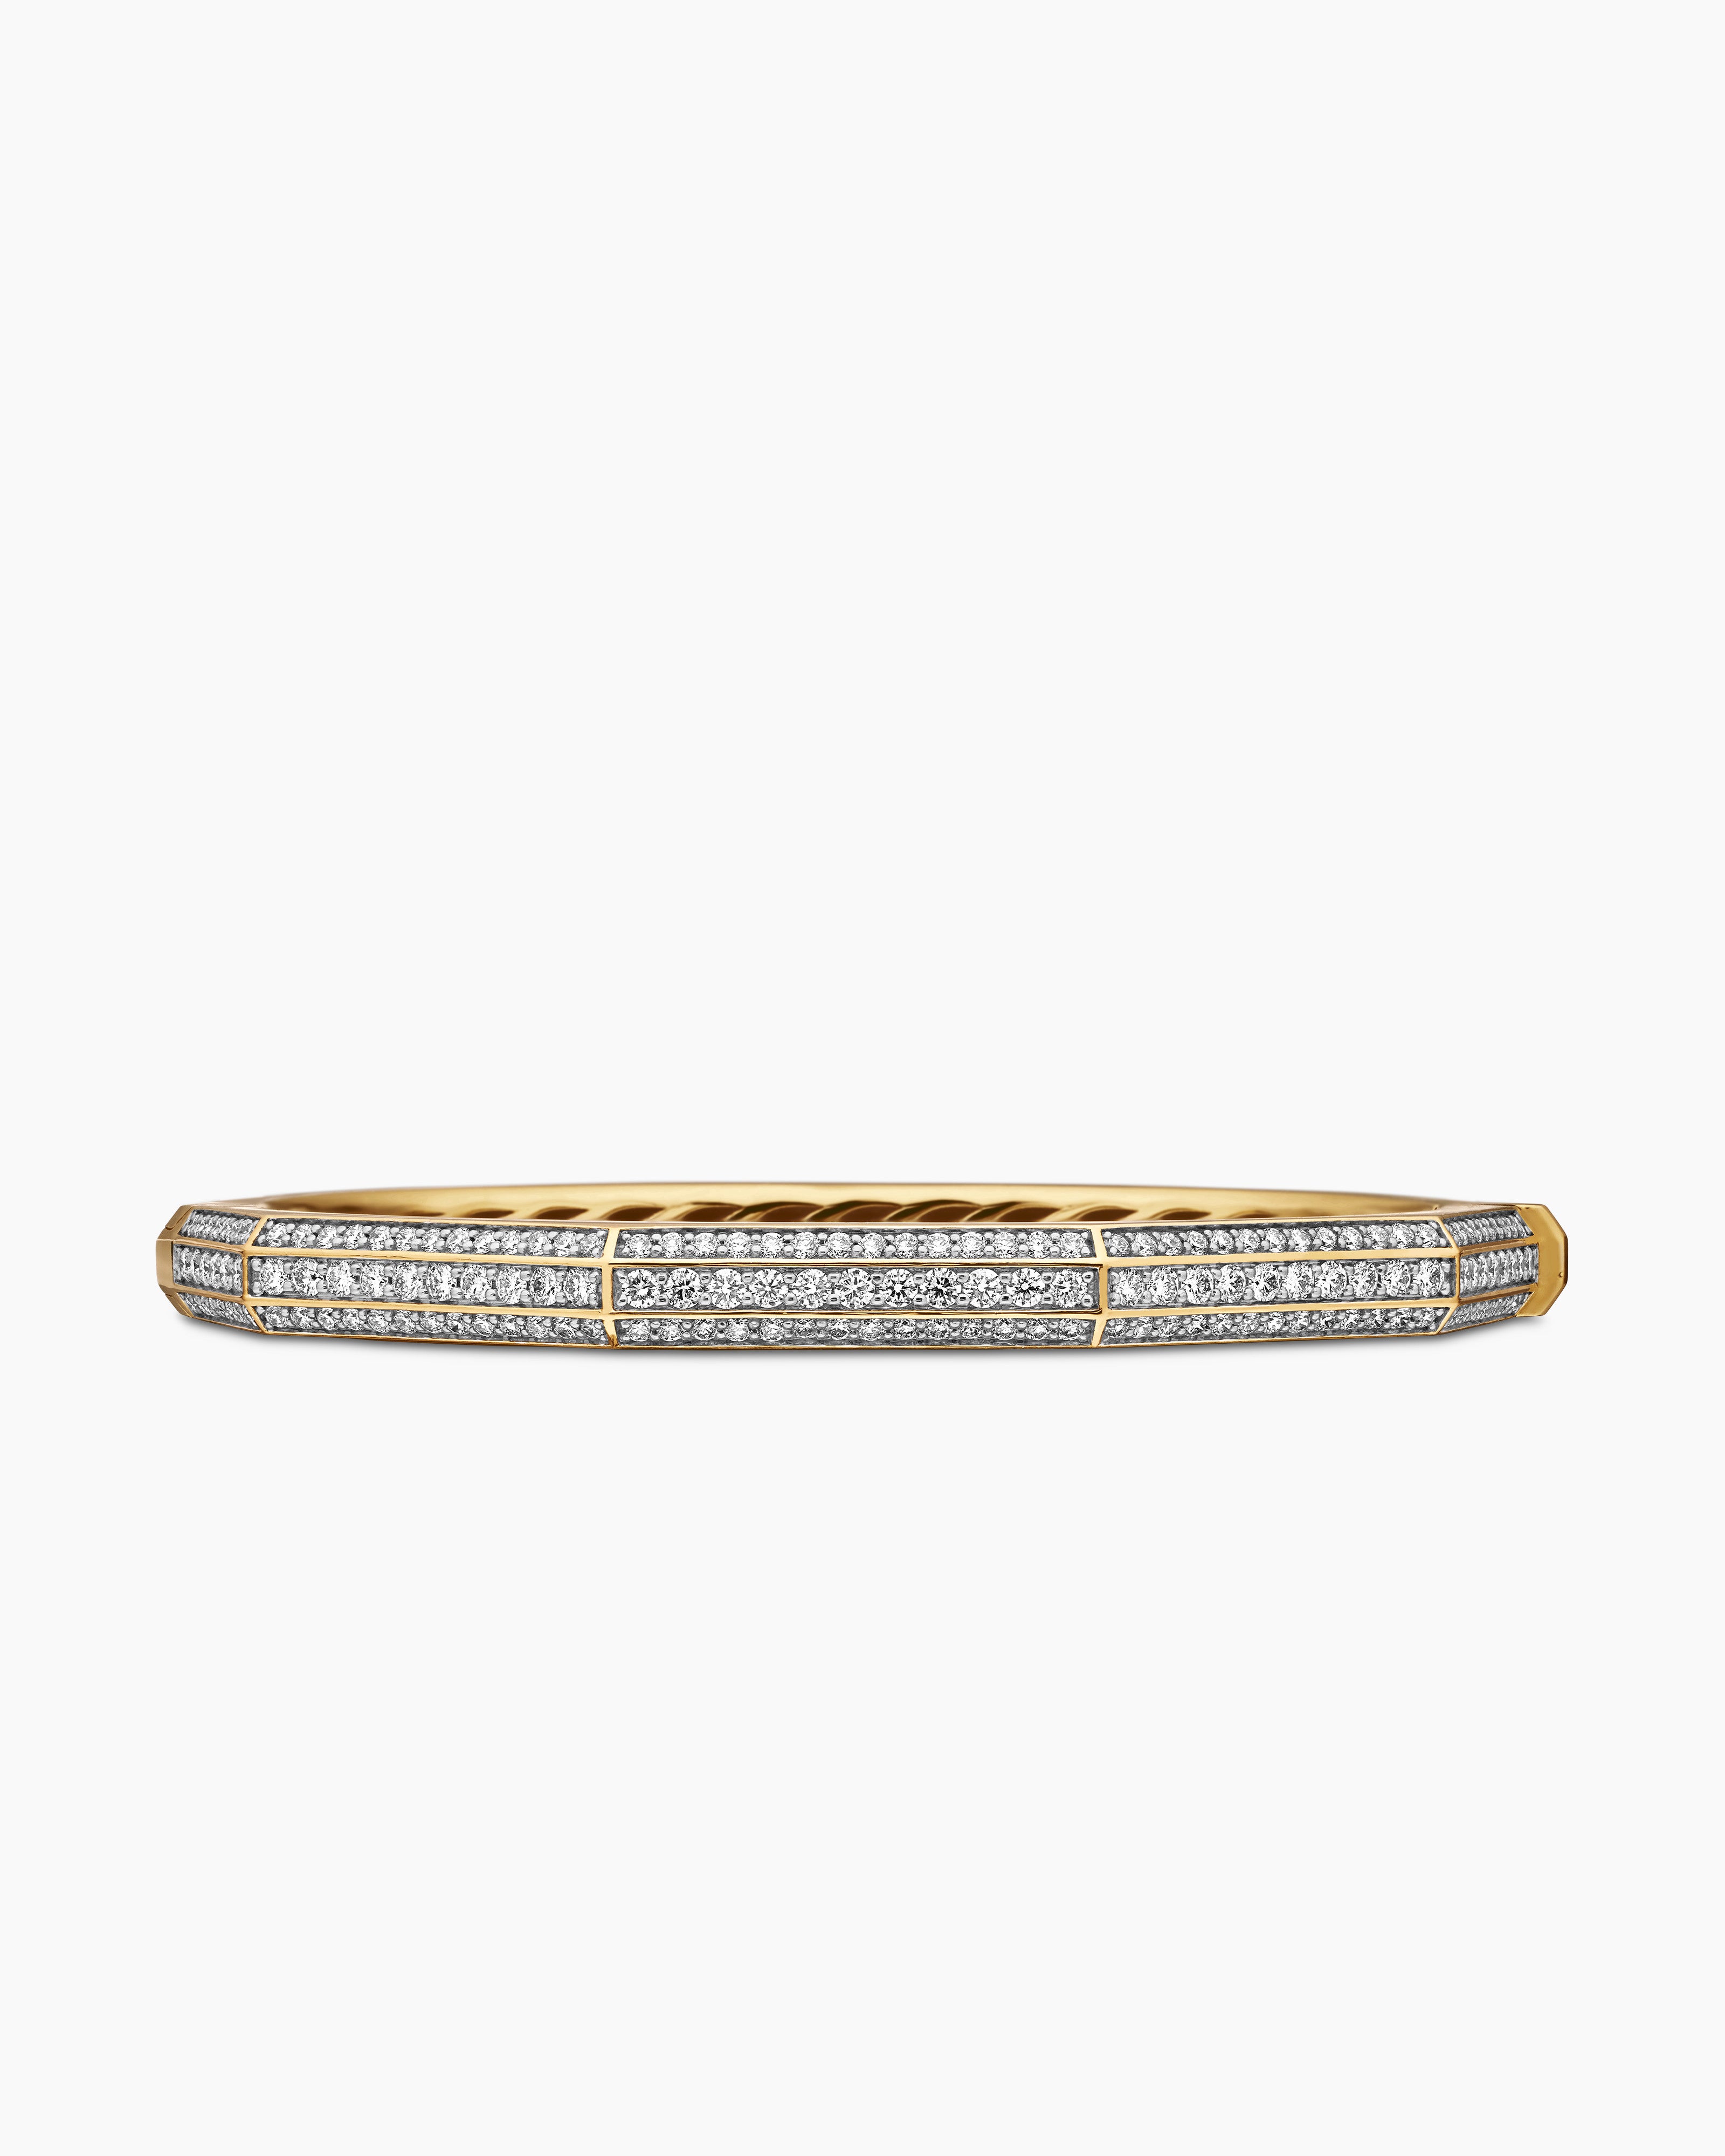 Cartier Love Pave Diamond Bracelet 18k Yellow Gold Size 18